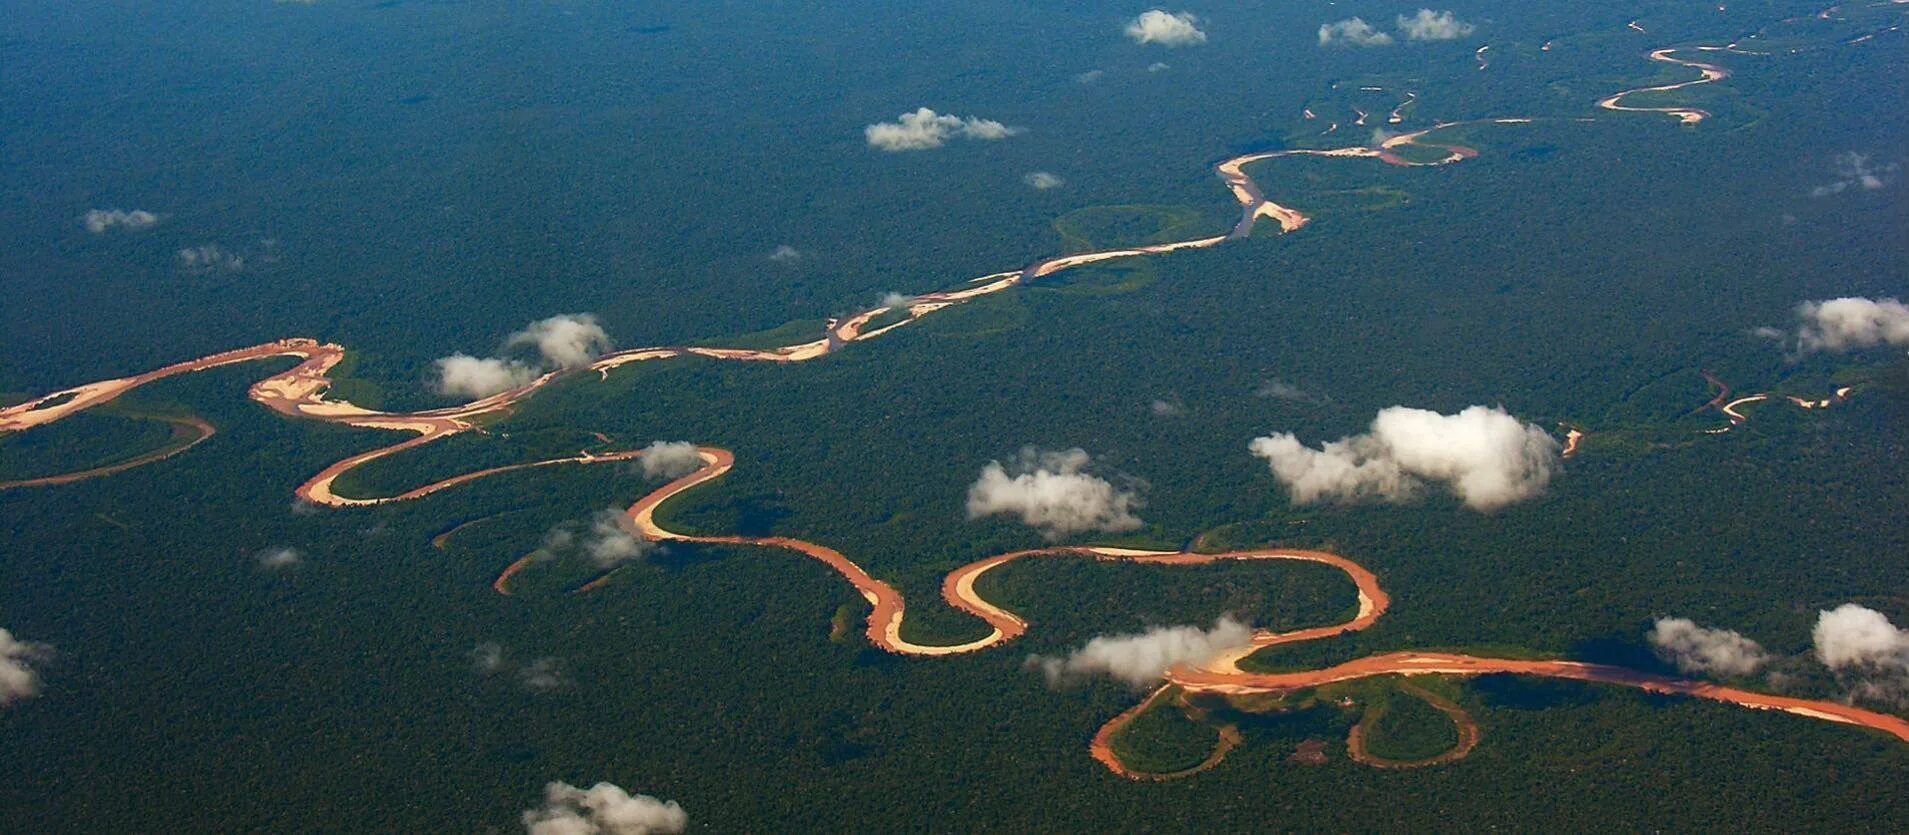 Амазонка сток. Бразилия Амазонская низменность. Амазонка река Укаяли. Исток реки Амазонка. Река Укаяли Перу.